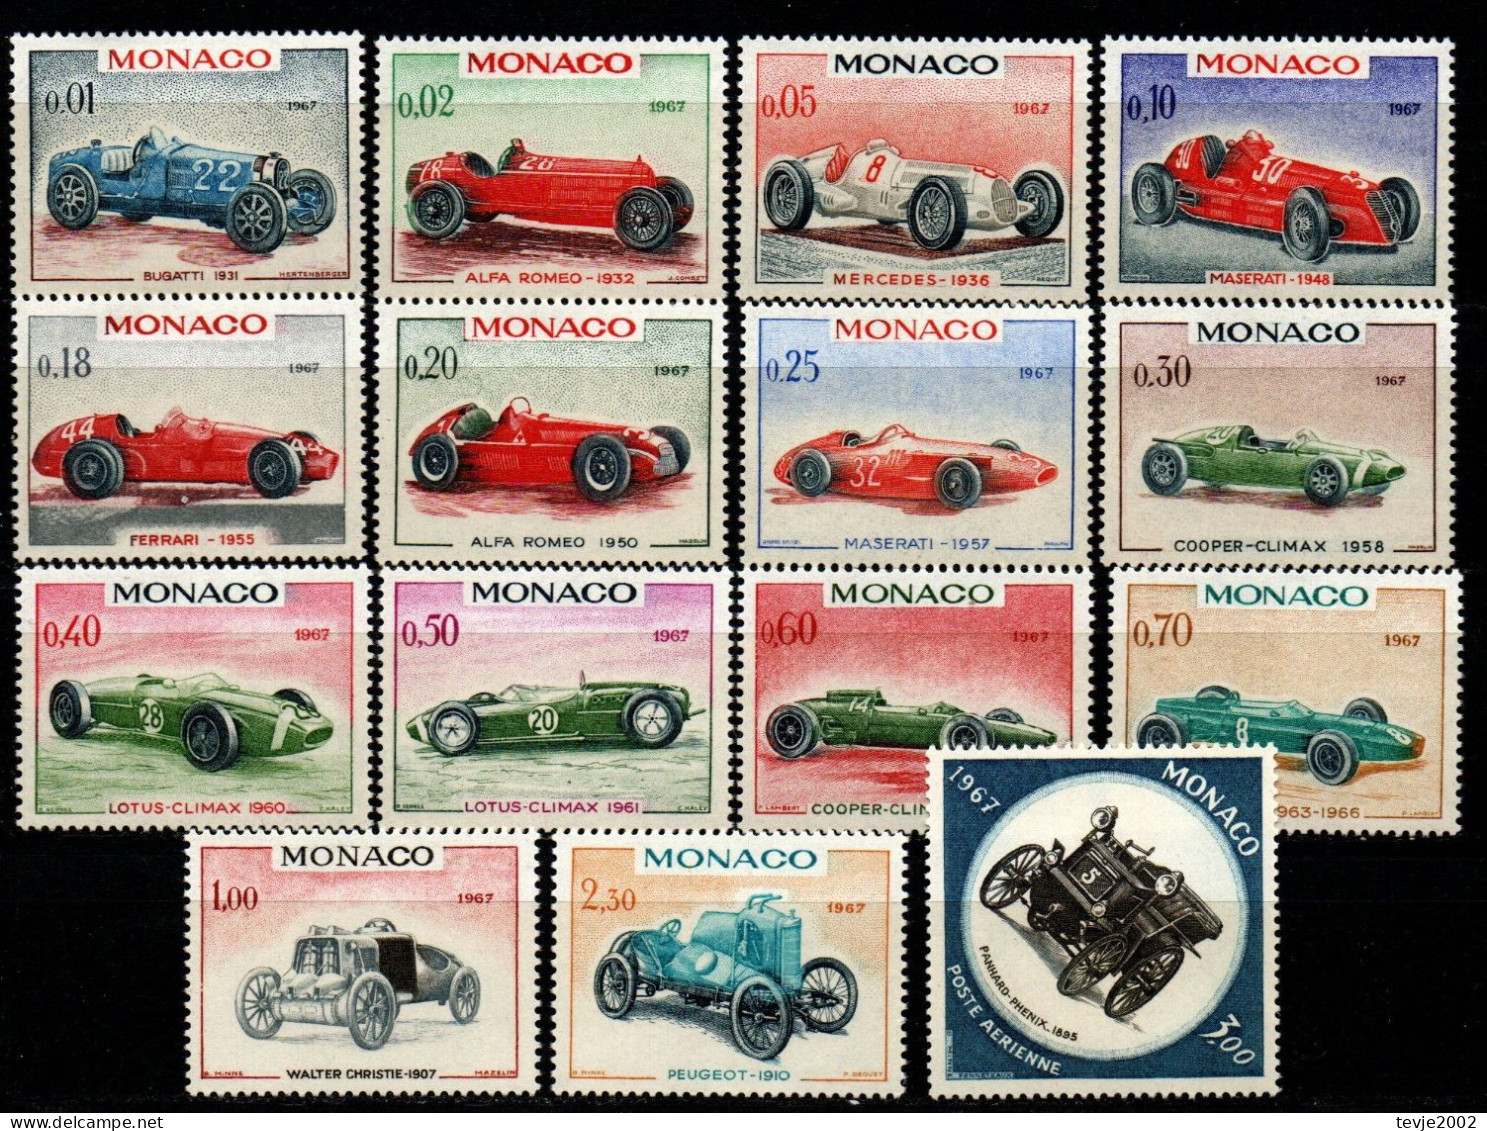 Monaco 1965 - Mi.Nr. 848 - 862 - Postfrisch MNH - Motorsport - Cars